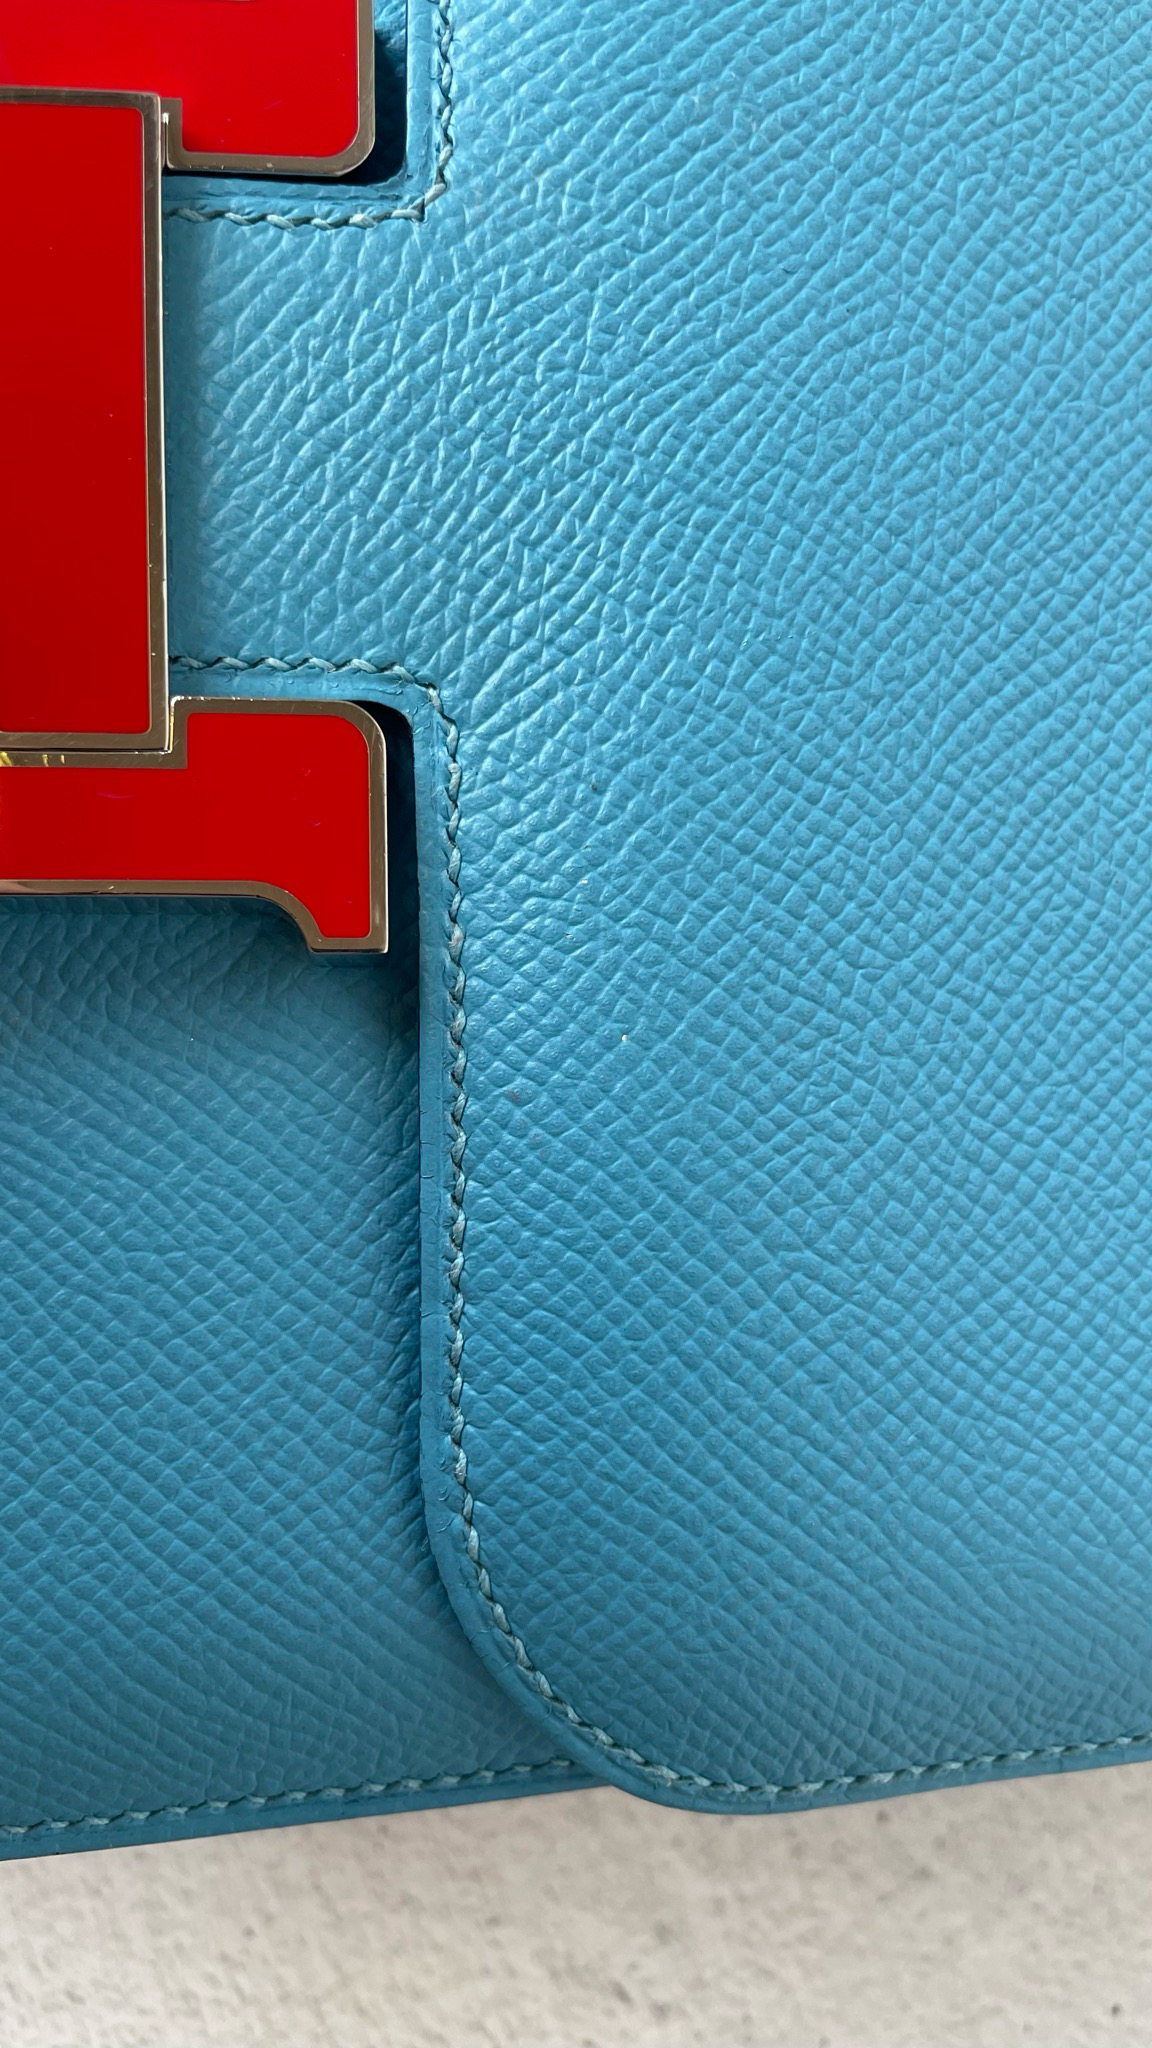 Hermès Bleu Zanzibar Epsom Leather Palladium Hardware Birkin 30 Bag Hermes